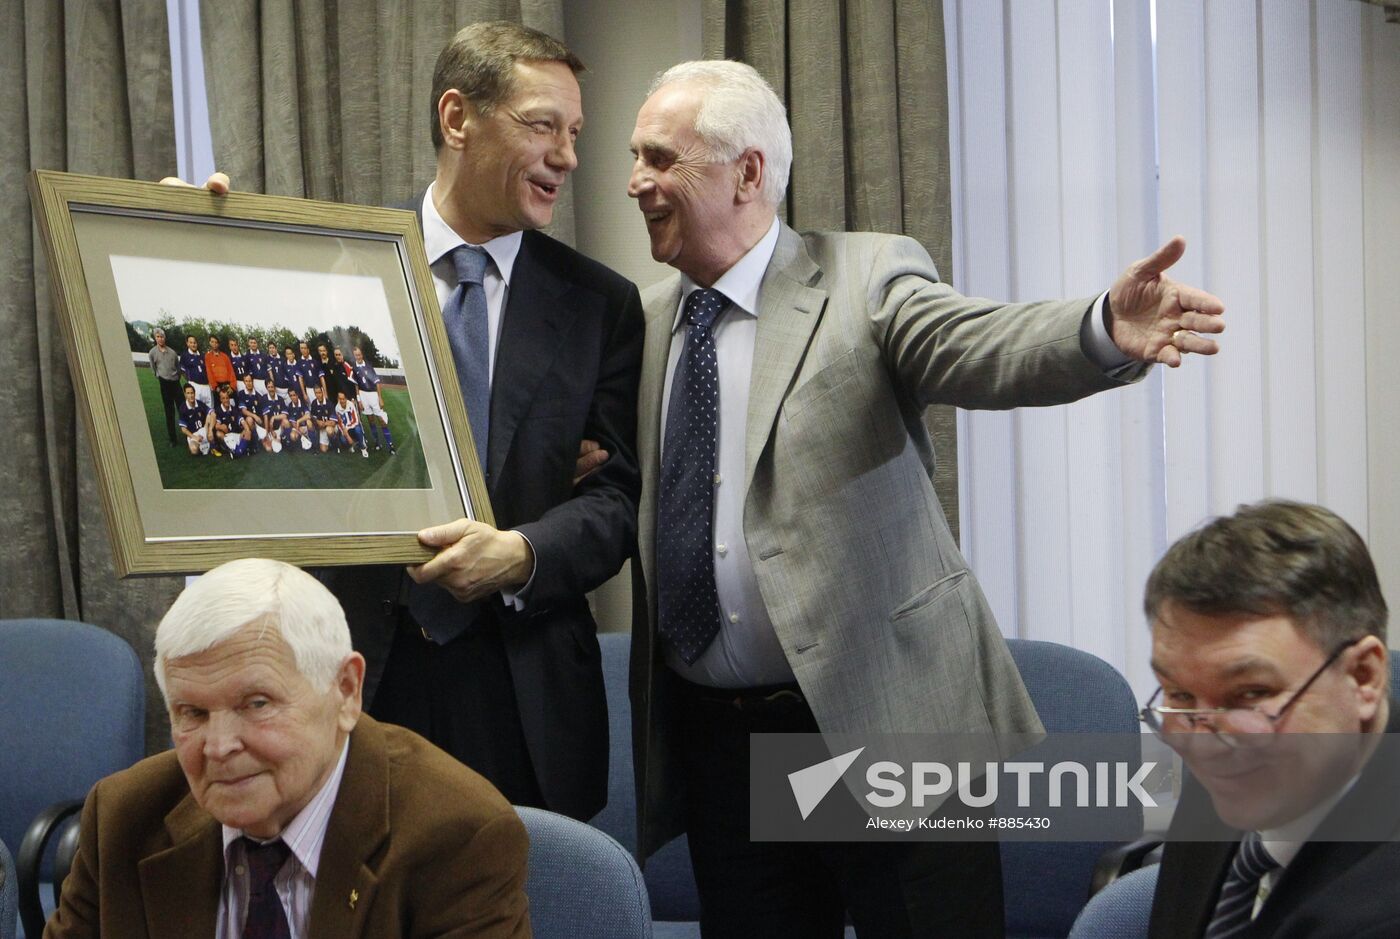 Meeting of Alexander Zhukov and veteran football players